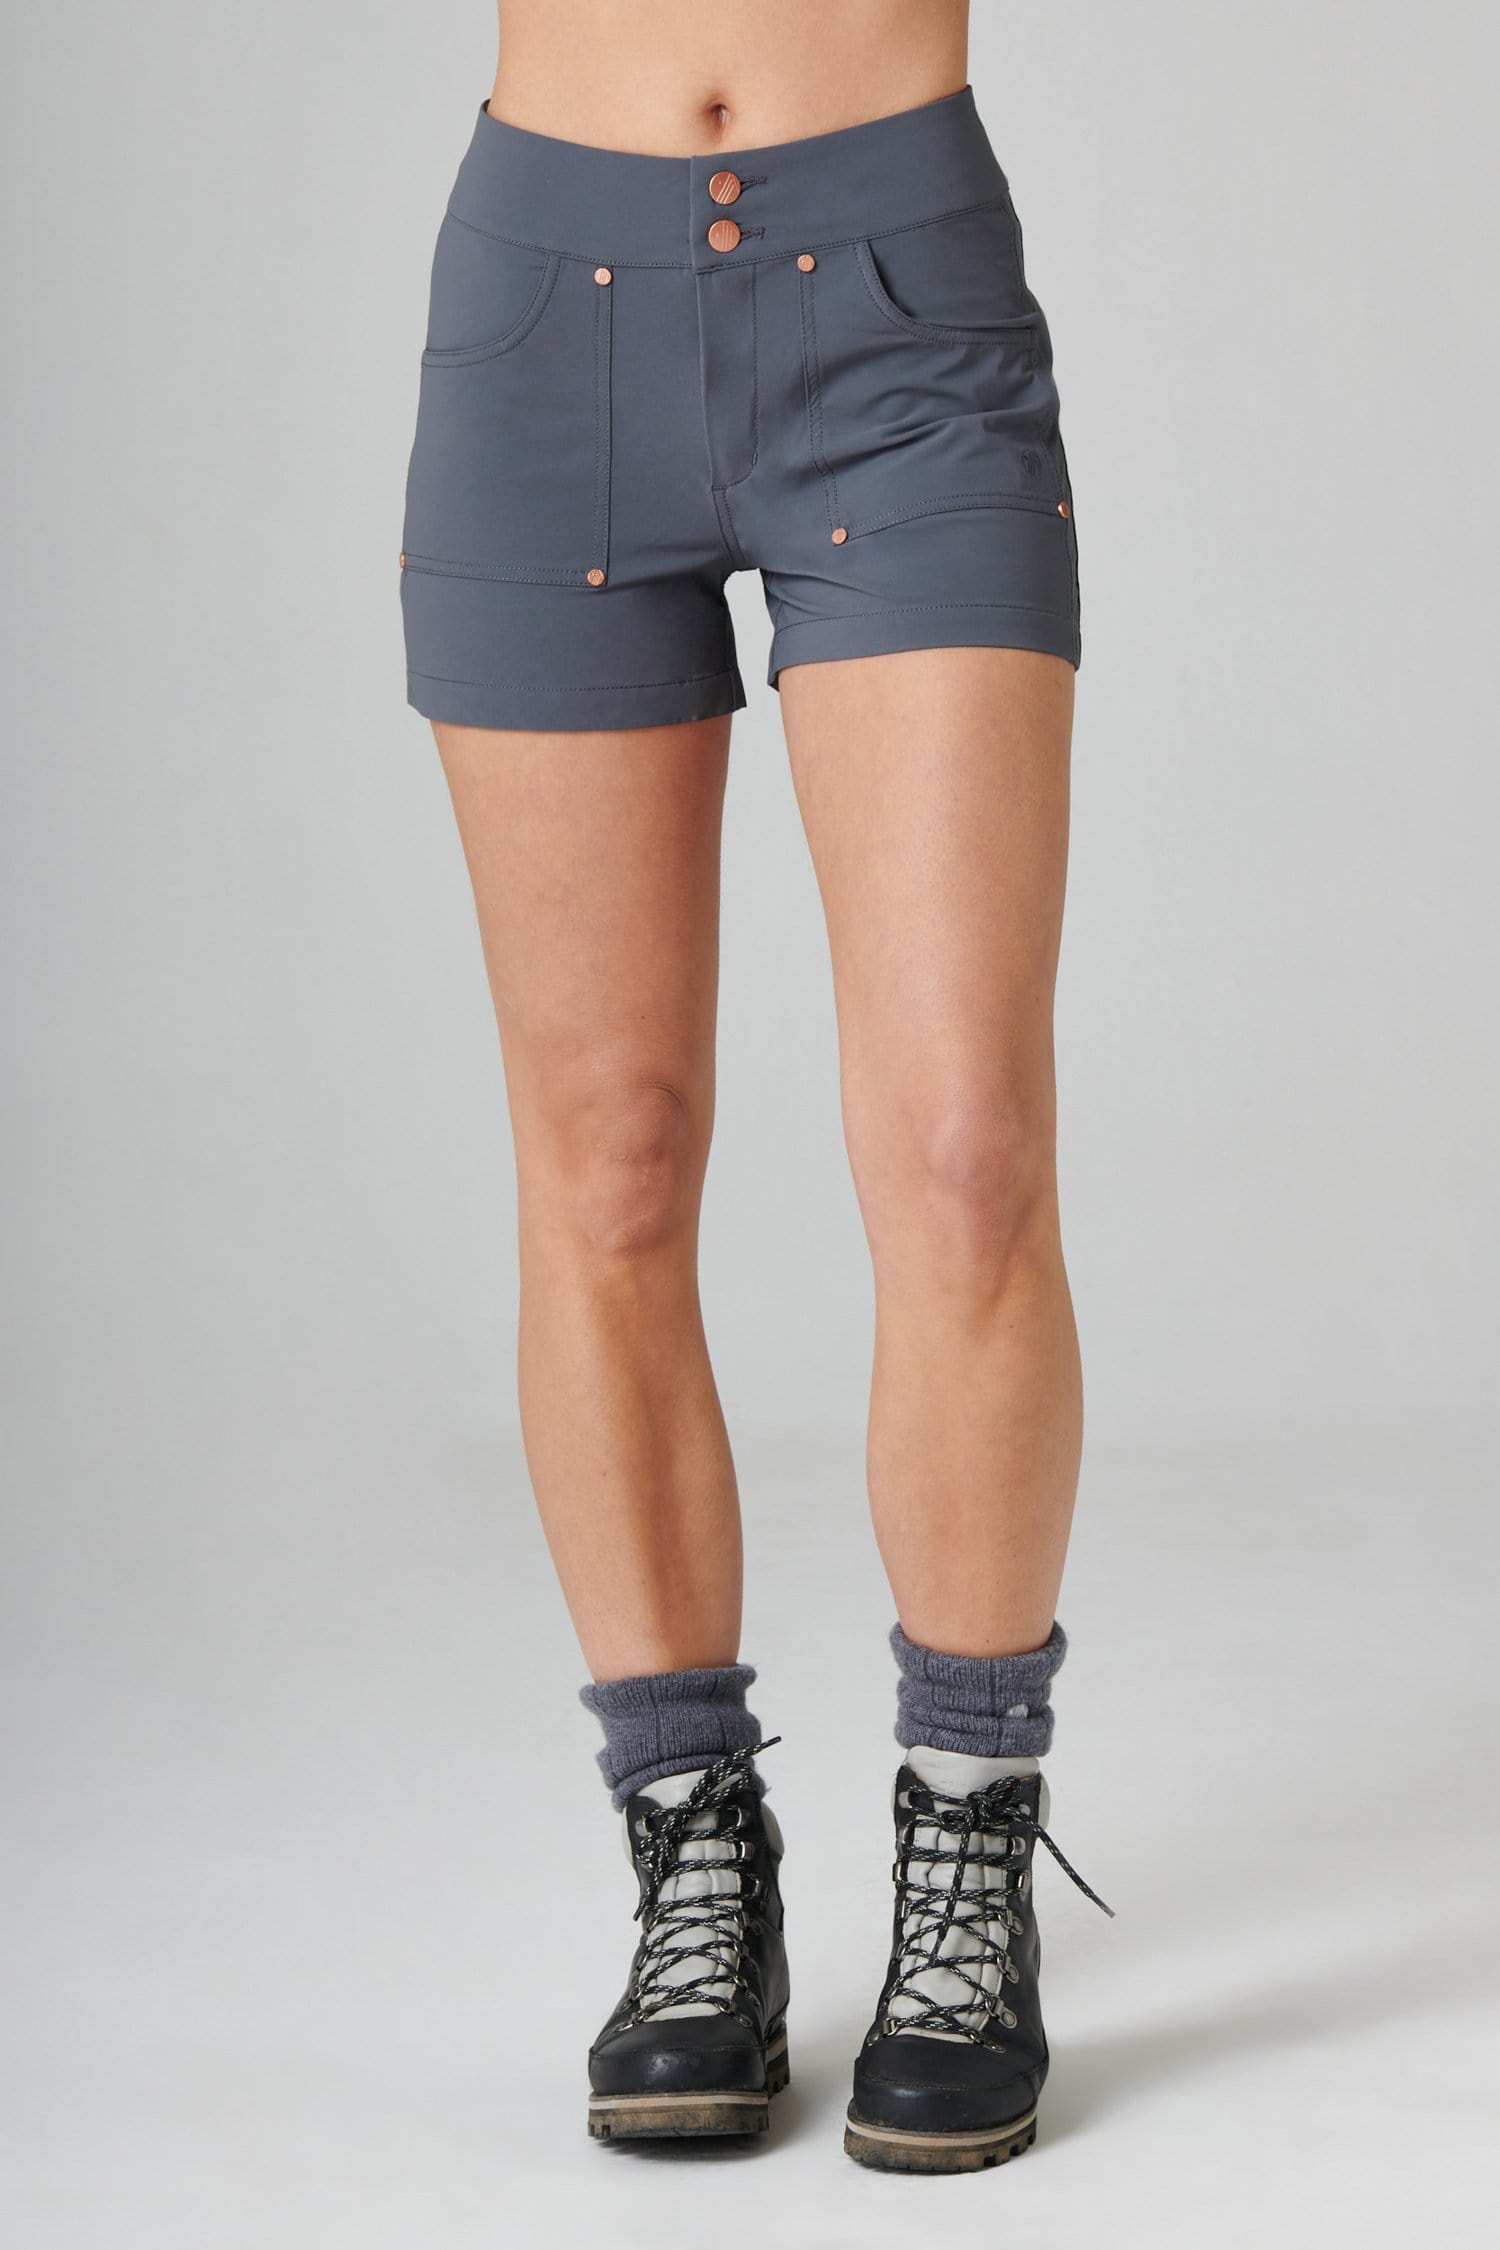 Trek Shorts - Storm Grey - 30 / Uk12 - Womens - Acai Outdoorwear